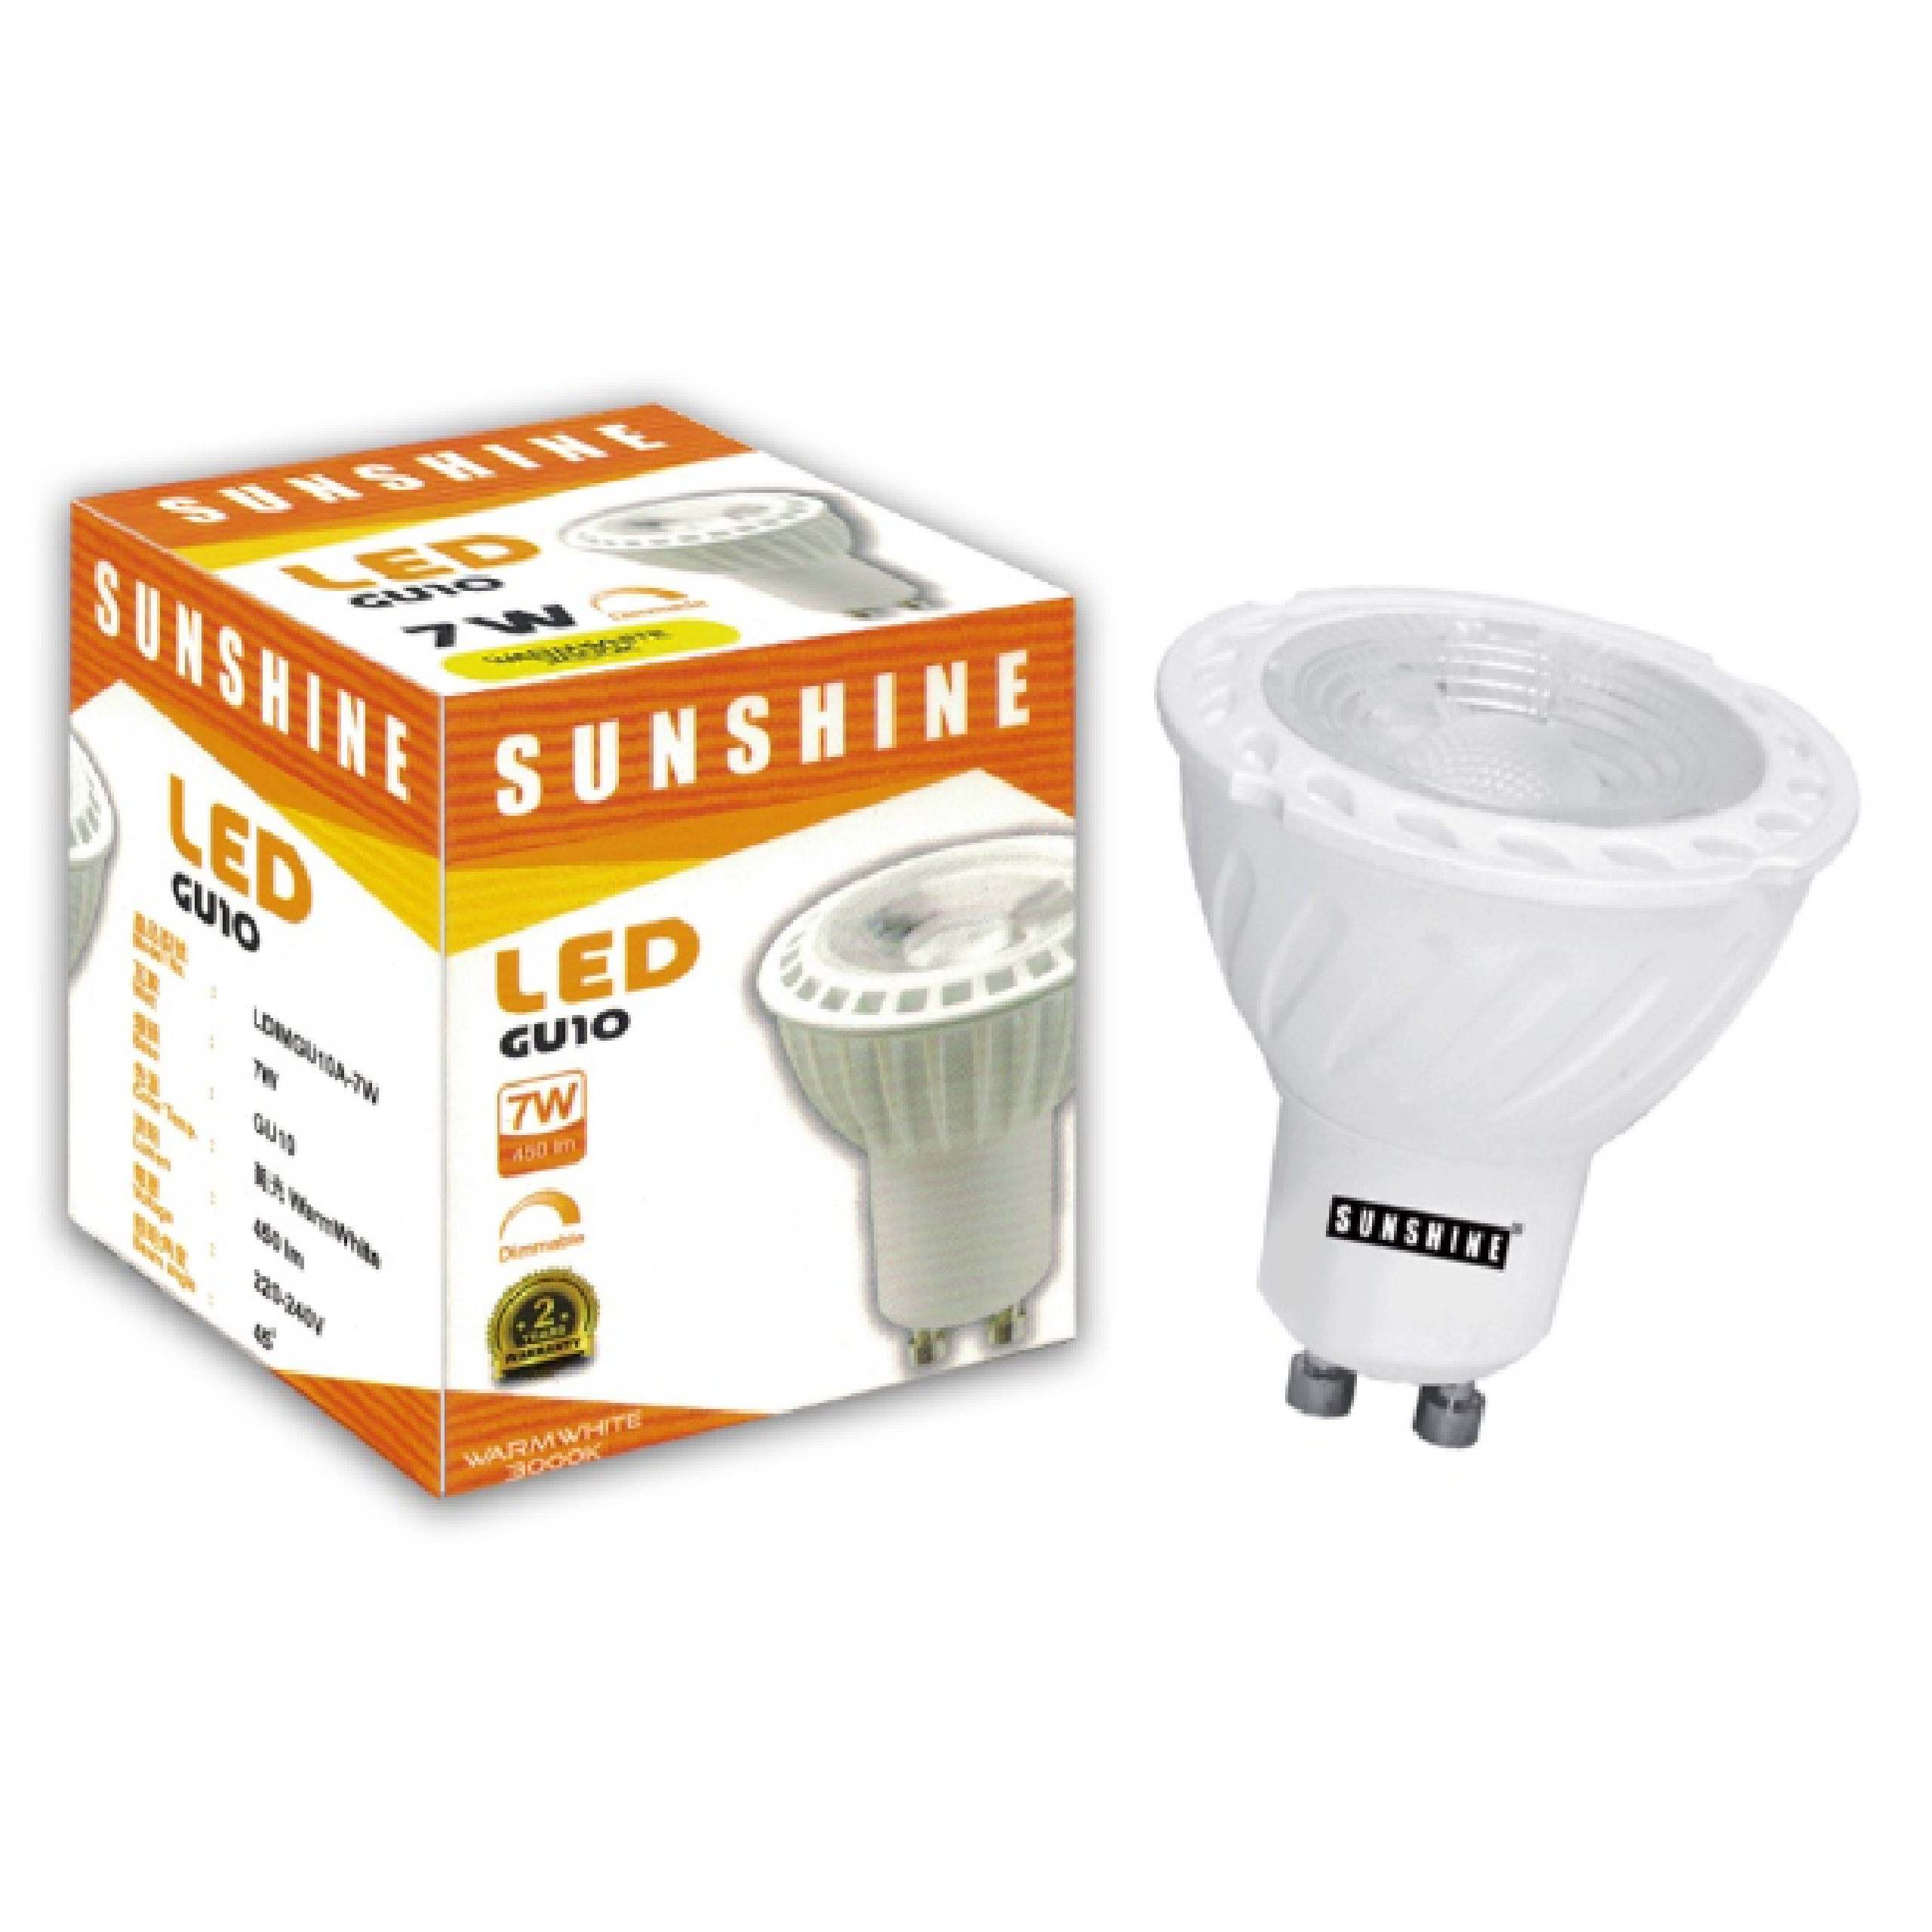 Sunshine LED 7W GU10 220V-240V DIMMABLE Warm White